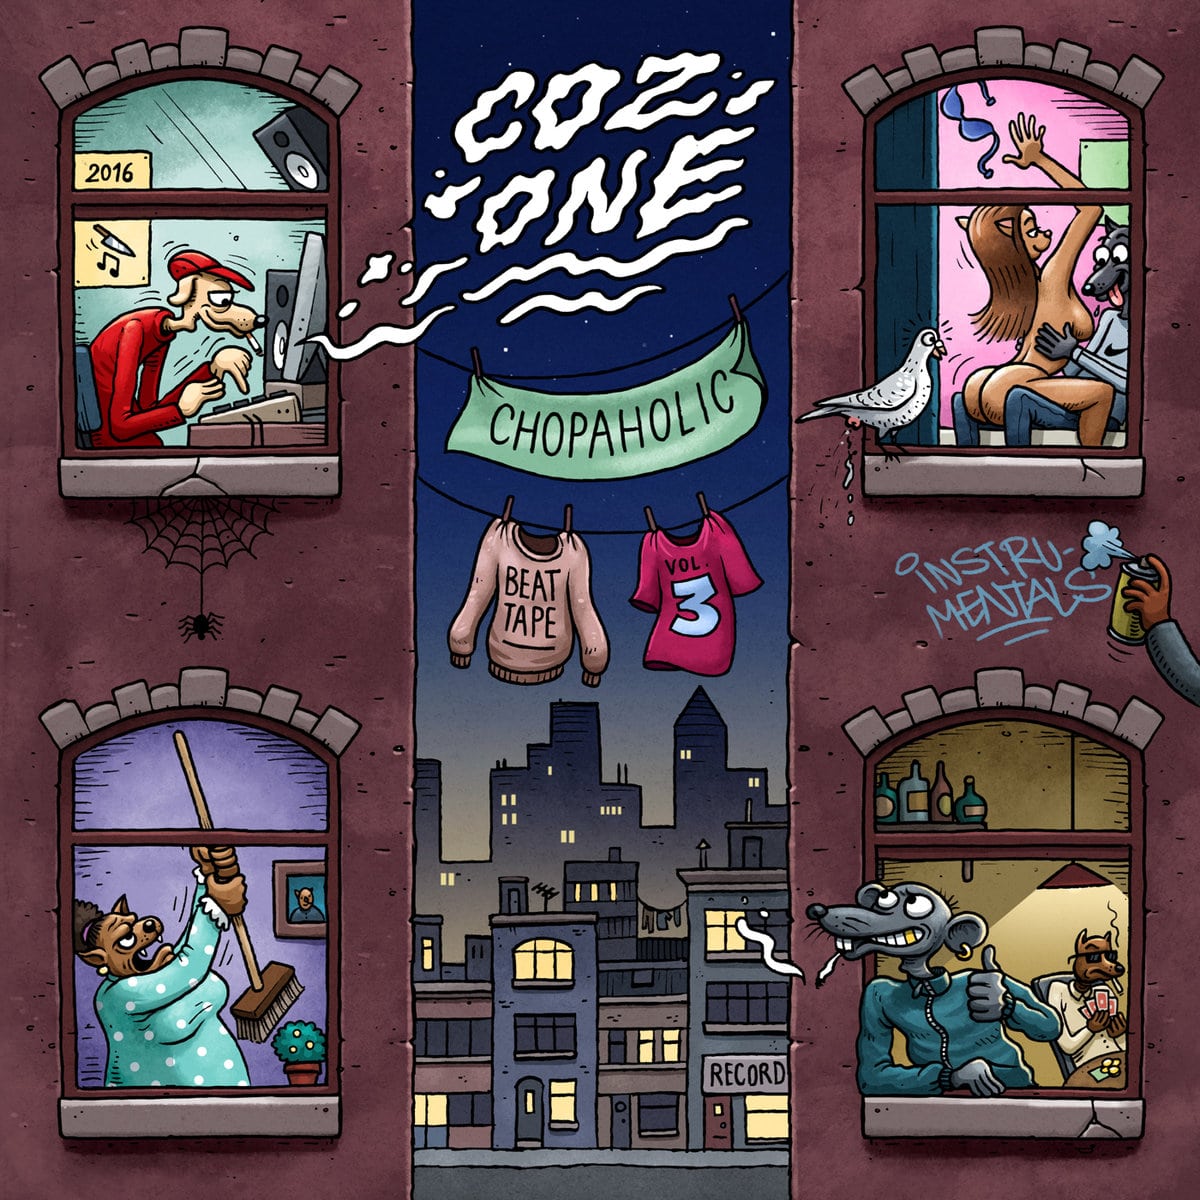 Cozone - "Chopaholic" (Release)